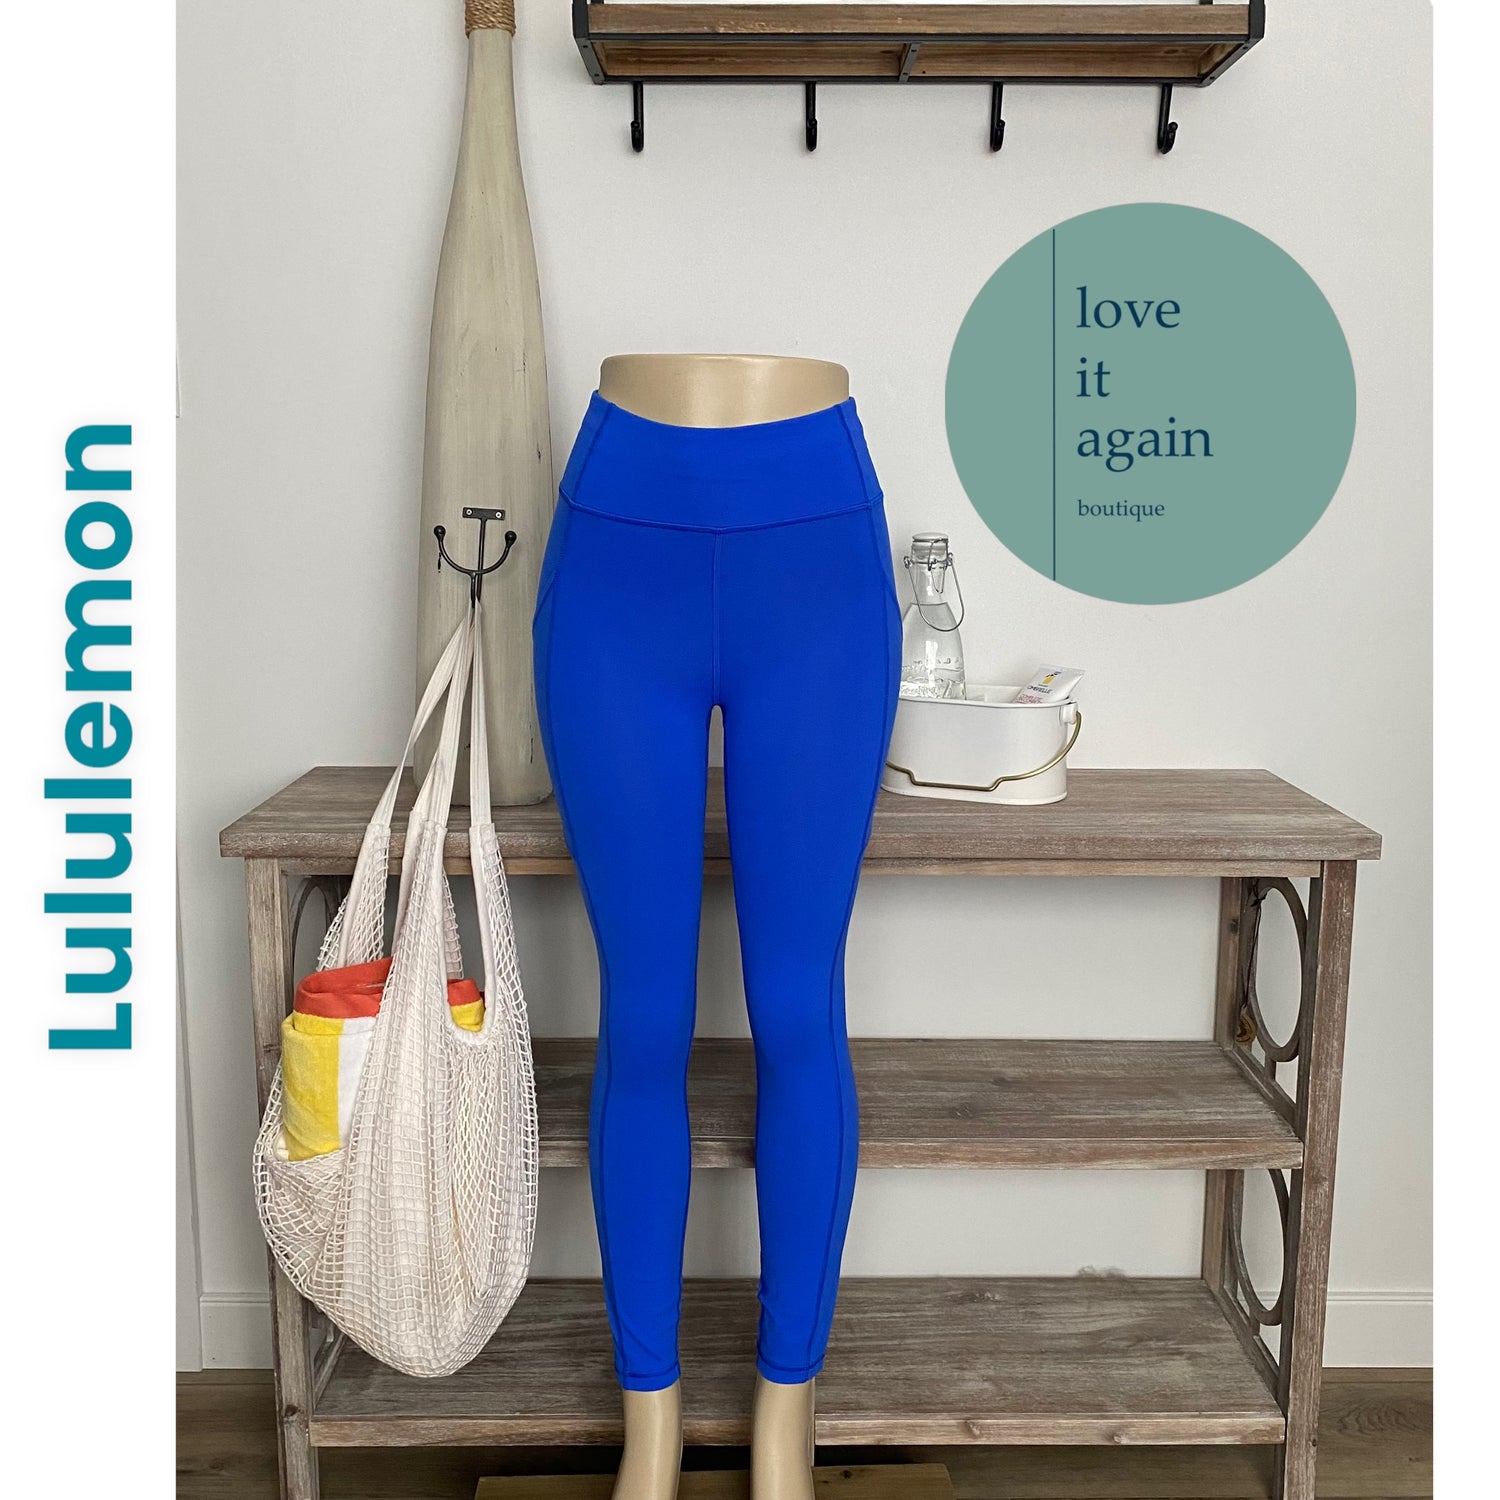 Lululemon Invigorate High-Rise (Pockets) Leggings Size 4 - Love it again boutique